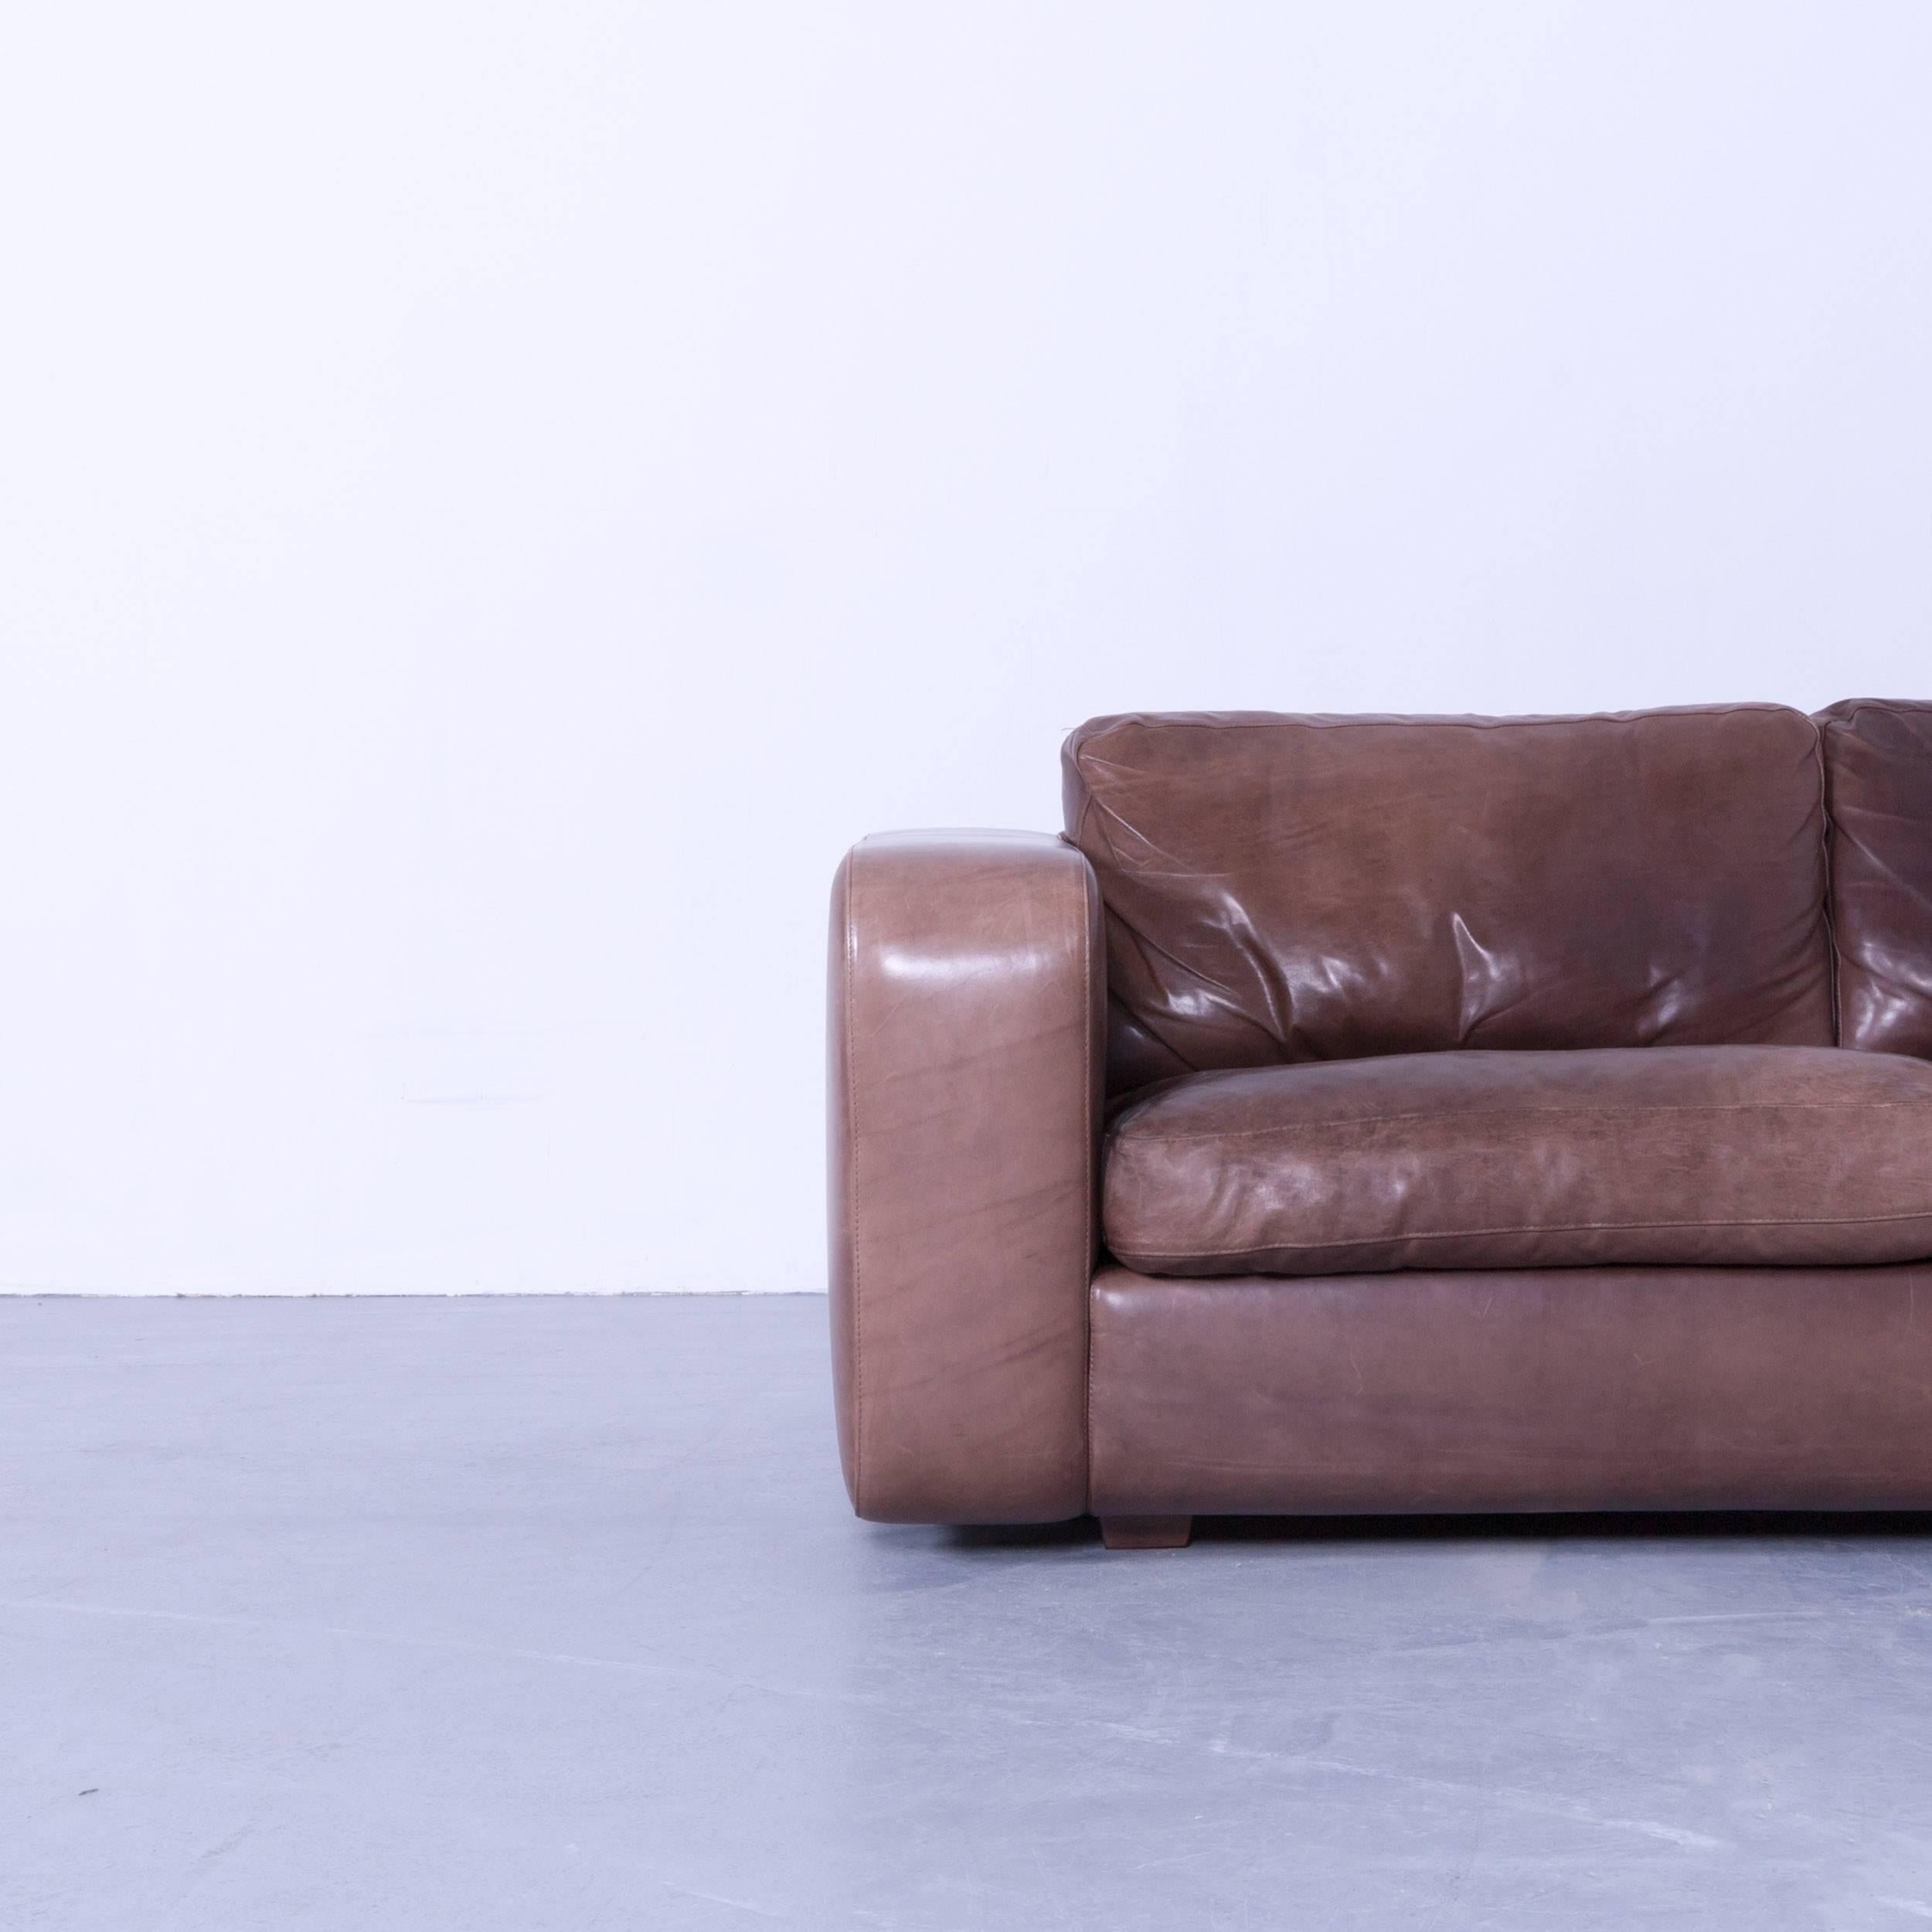 Machalke Valentino corner sofa mocca brown anilin leather modern designer.